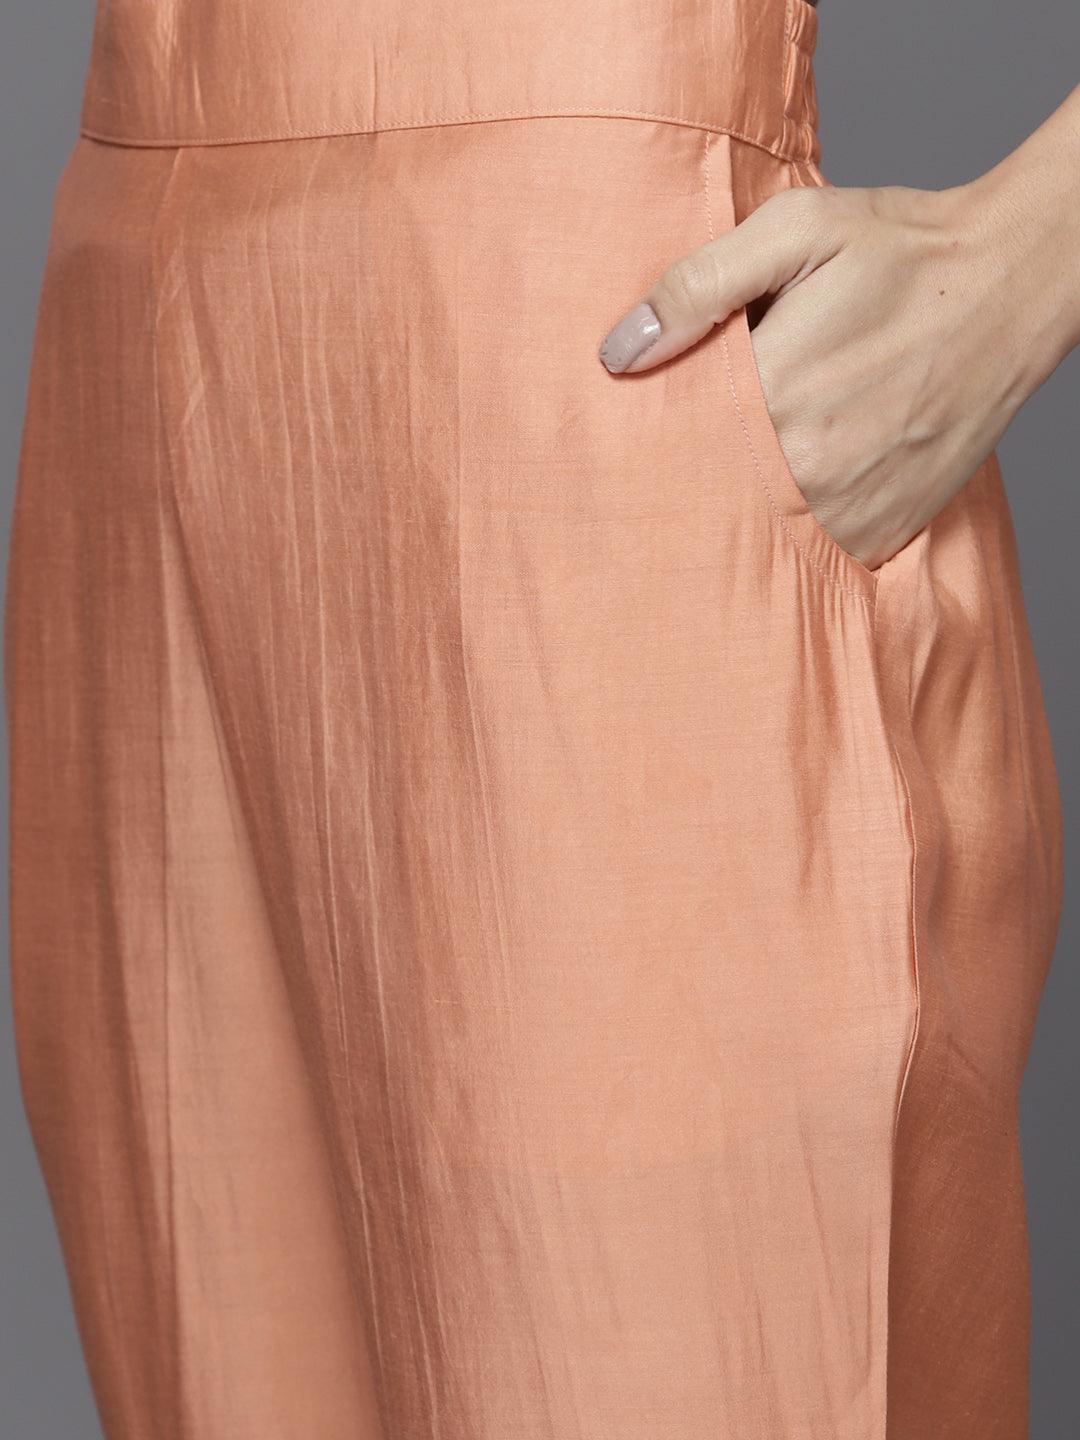 Peach Yoke Design Chanderi Silk Straight Suit Set - Libas